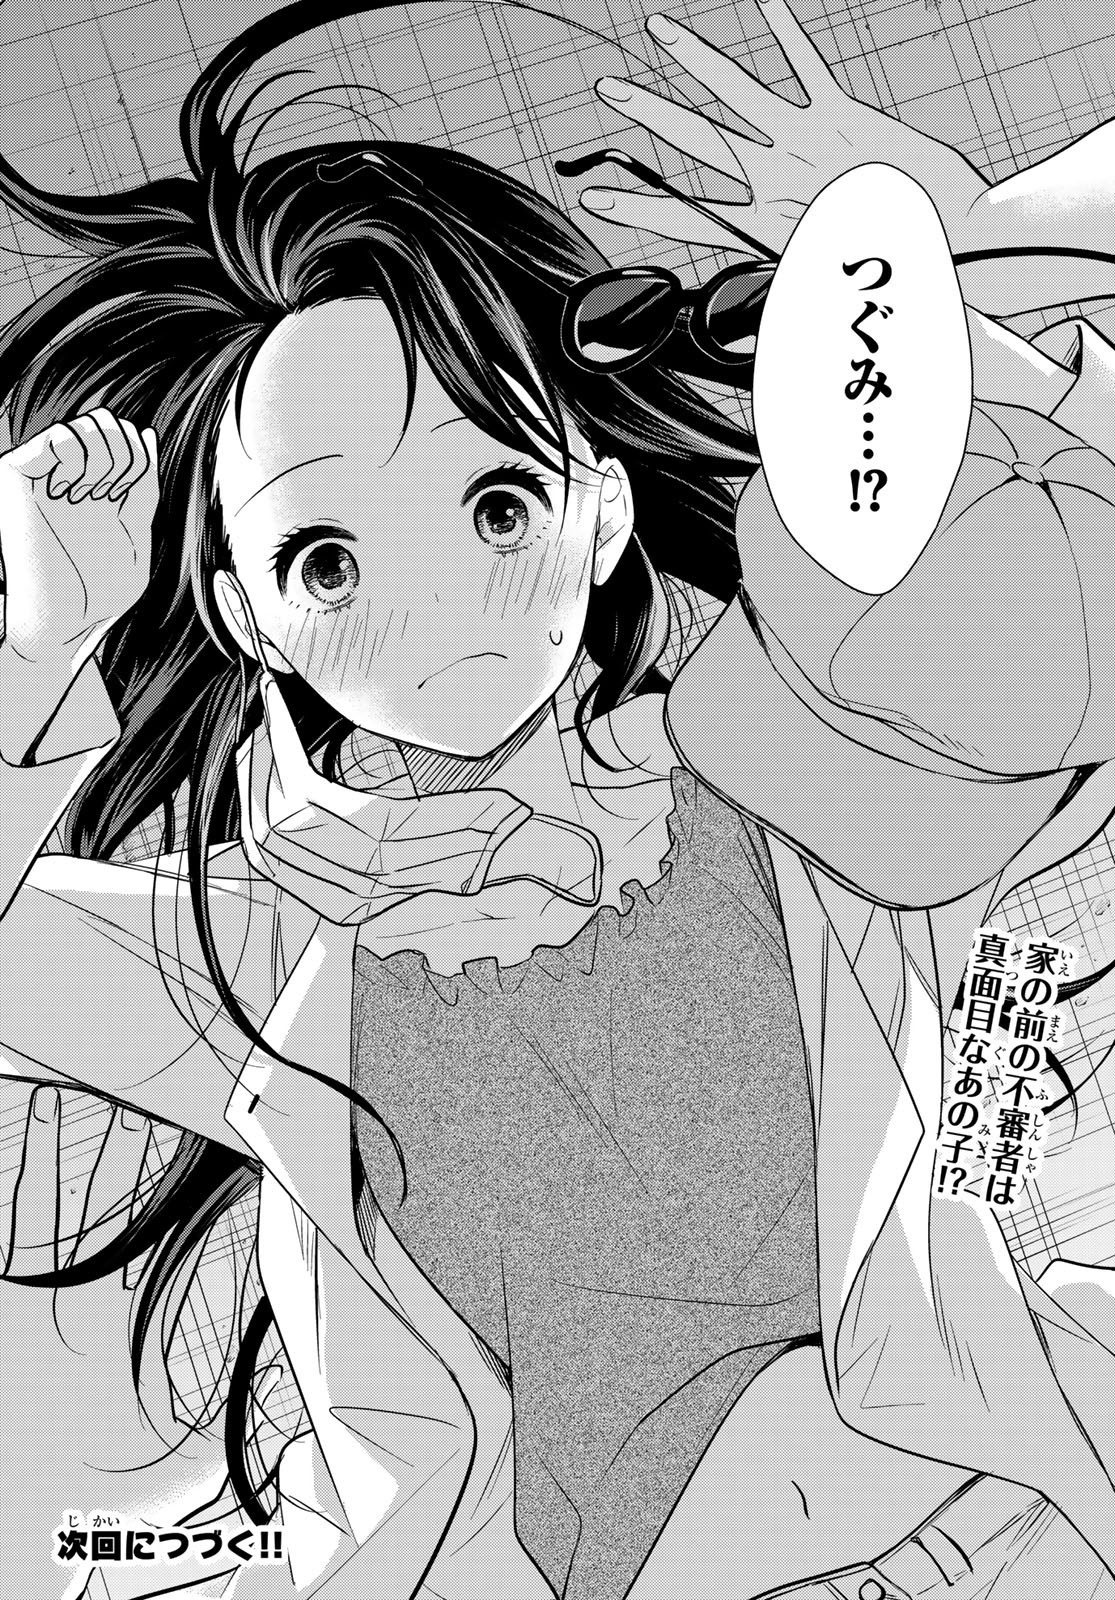 Kimi ga Megami Nara Ii no ni (I Wish You Were My Muse) - Chapter 015 - Page 20